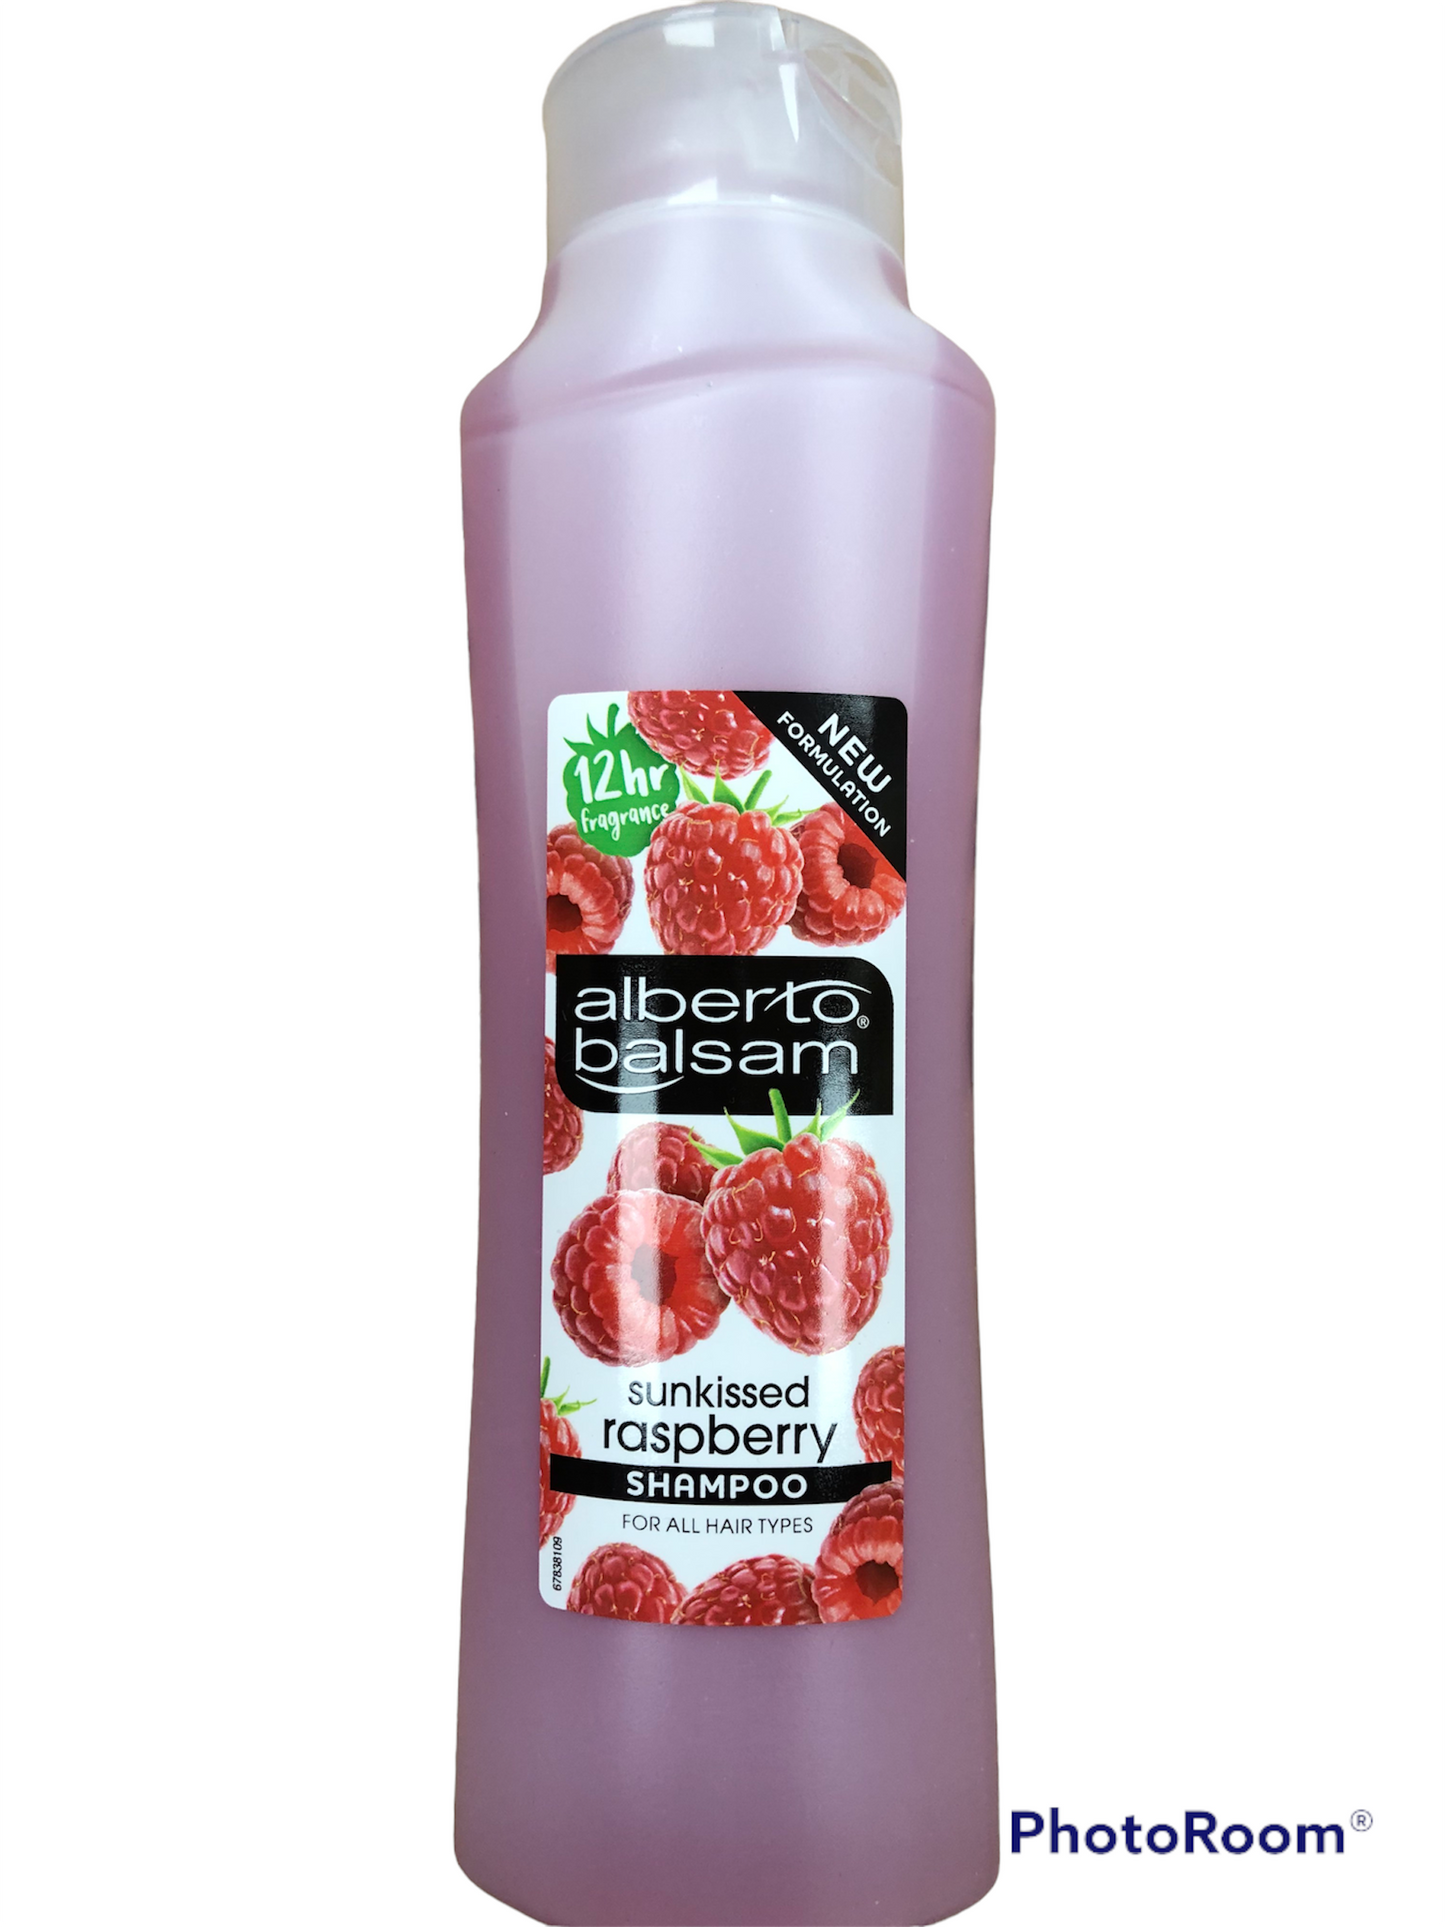 Alberto balsam raspberry shampoo 350ml